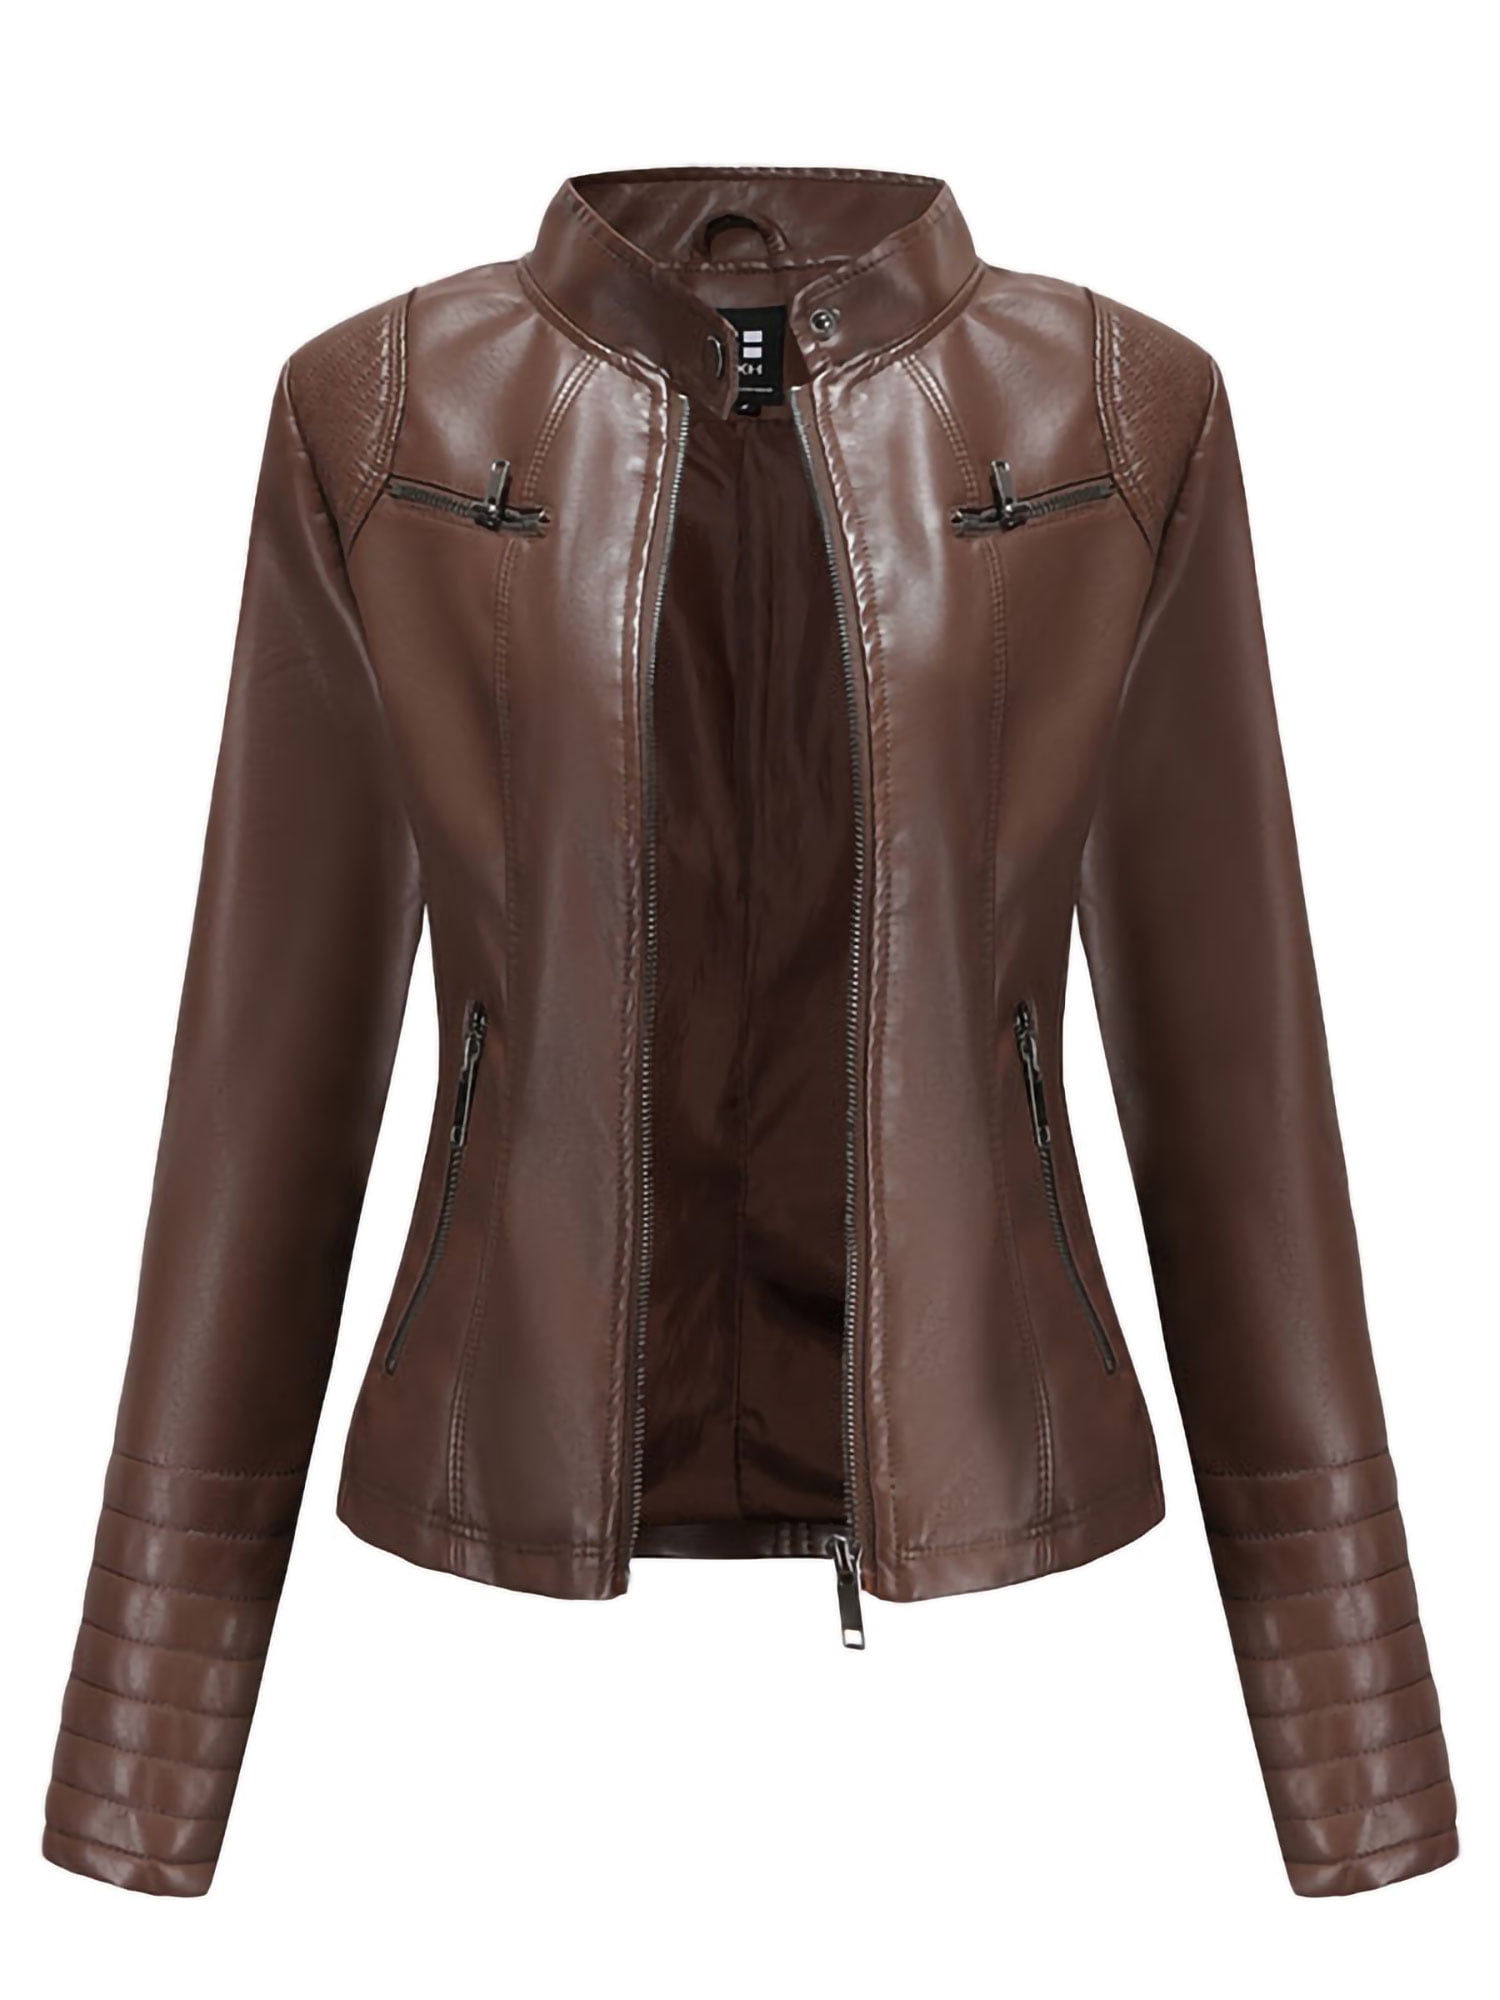 AMaVo New Moto Biker Jacket Coat For Women Collarless